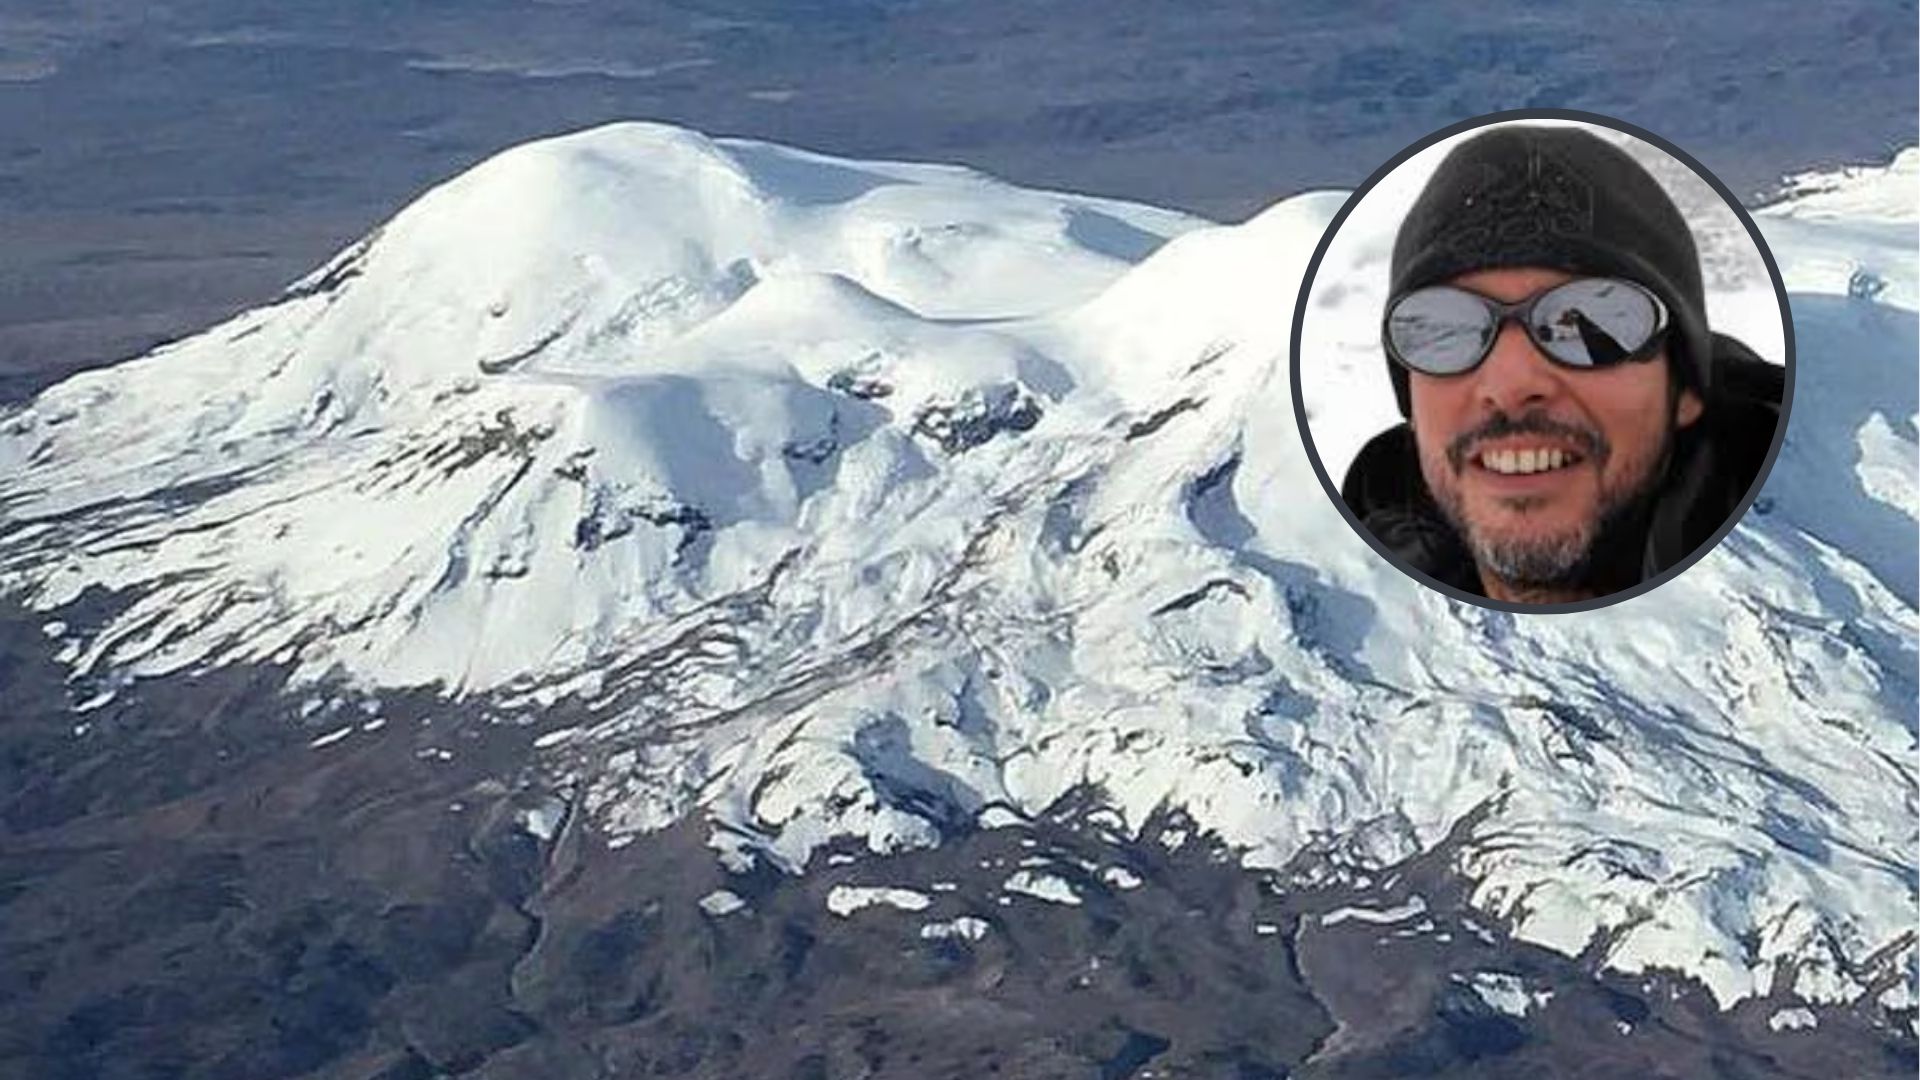 Policía de Alta Montaña localizan equipos de turista desaparecido